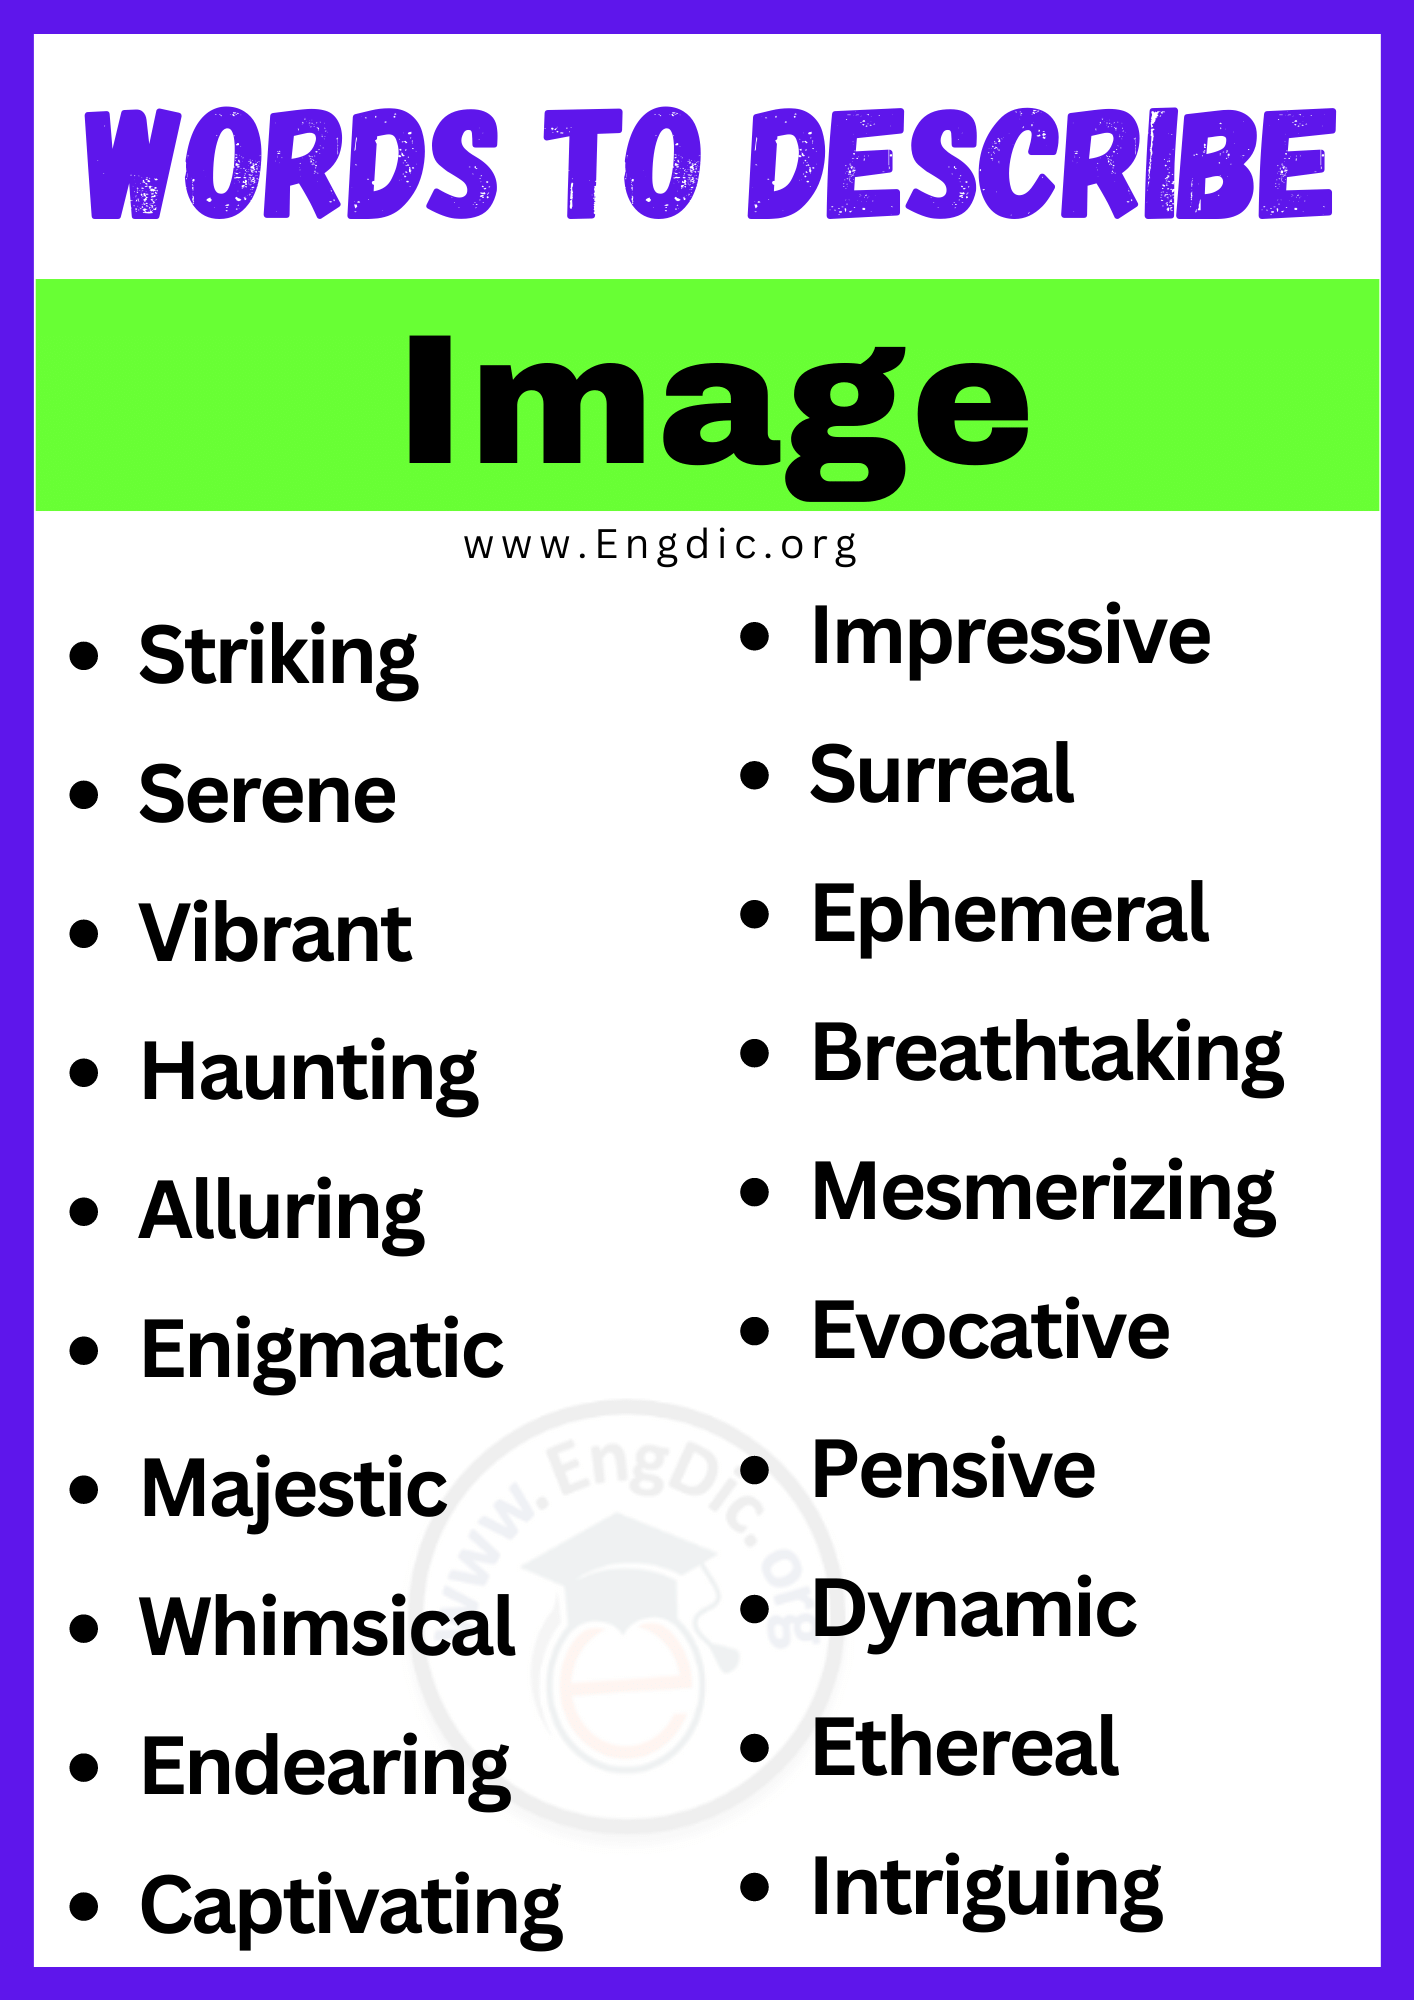 Words to Describe Image